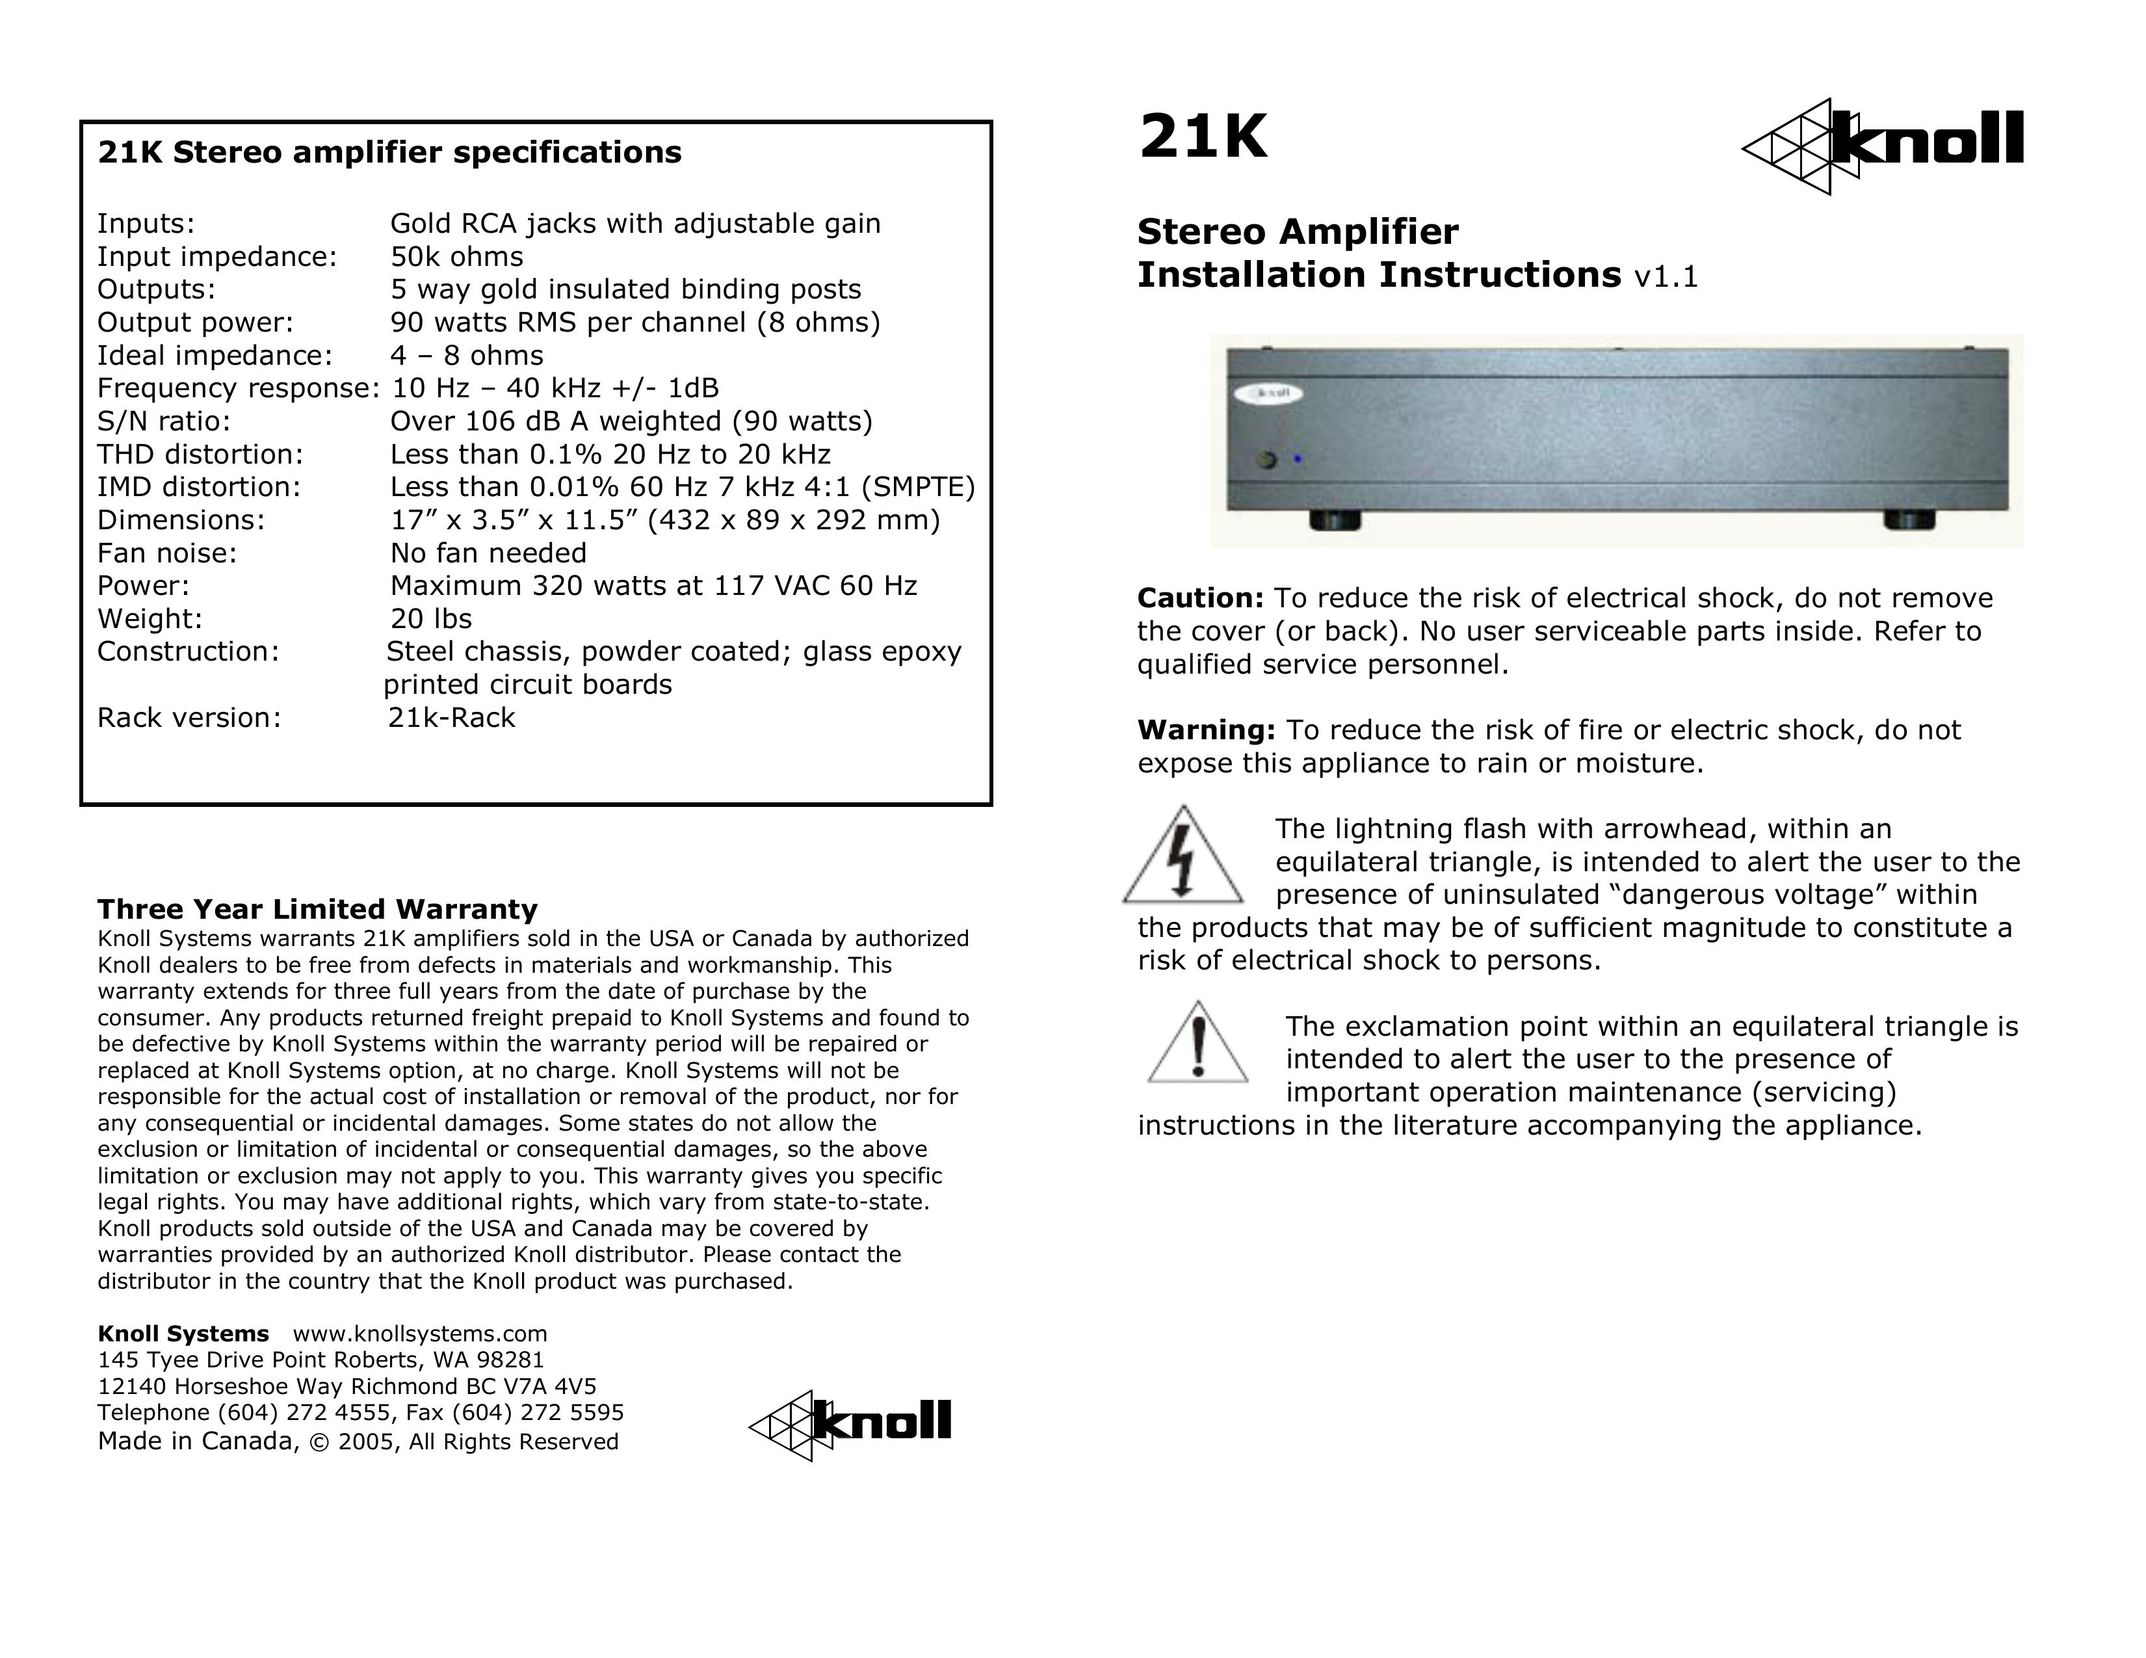 Knoll 21K Stereo Amplifier User Manual